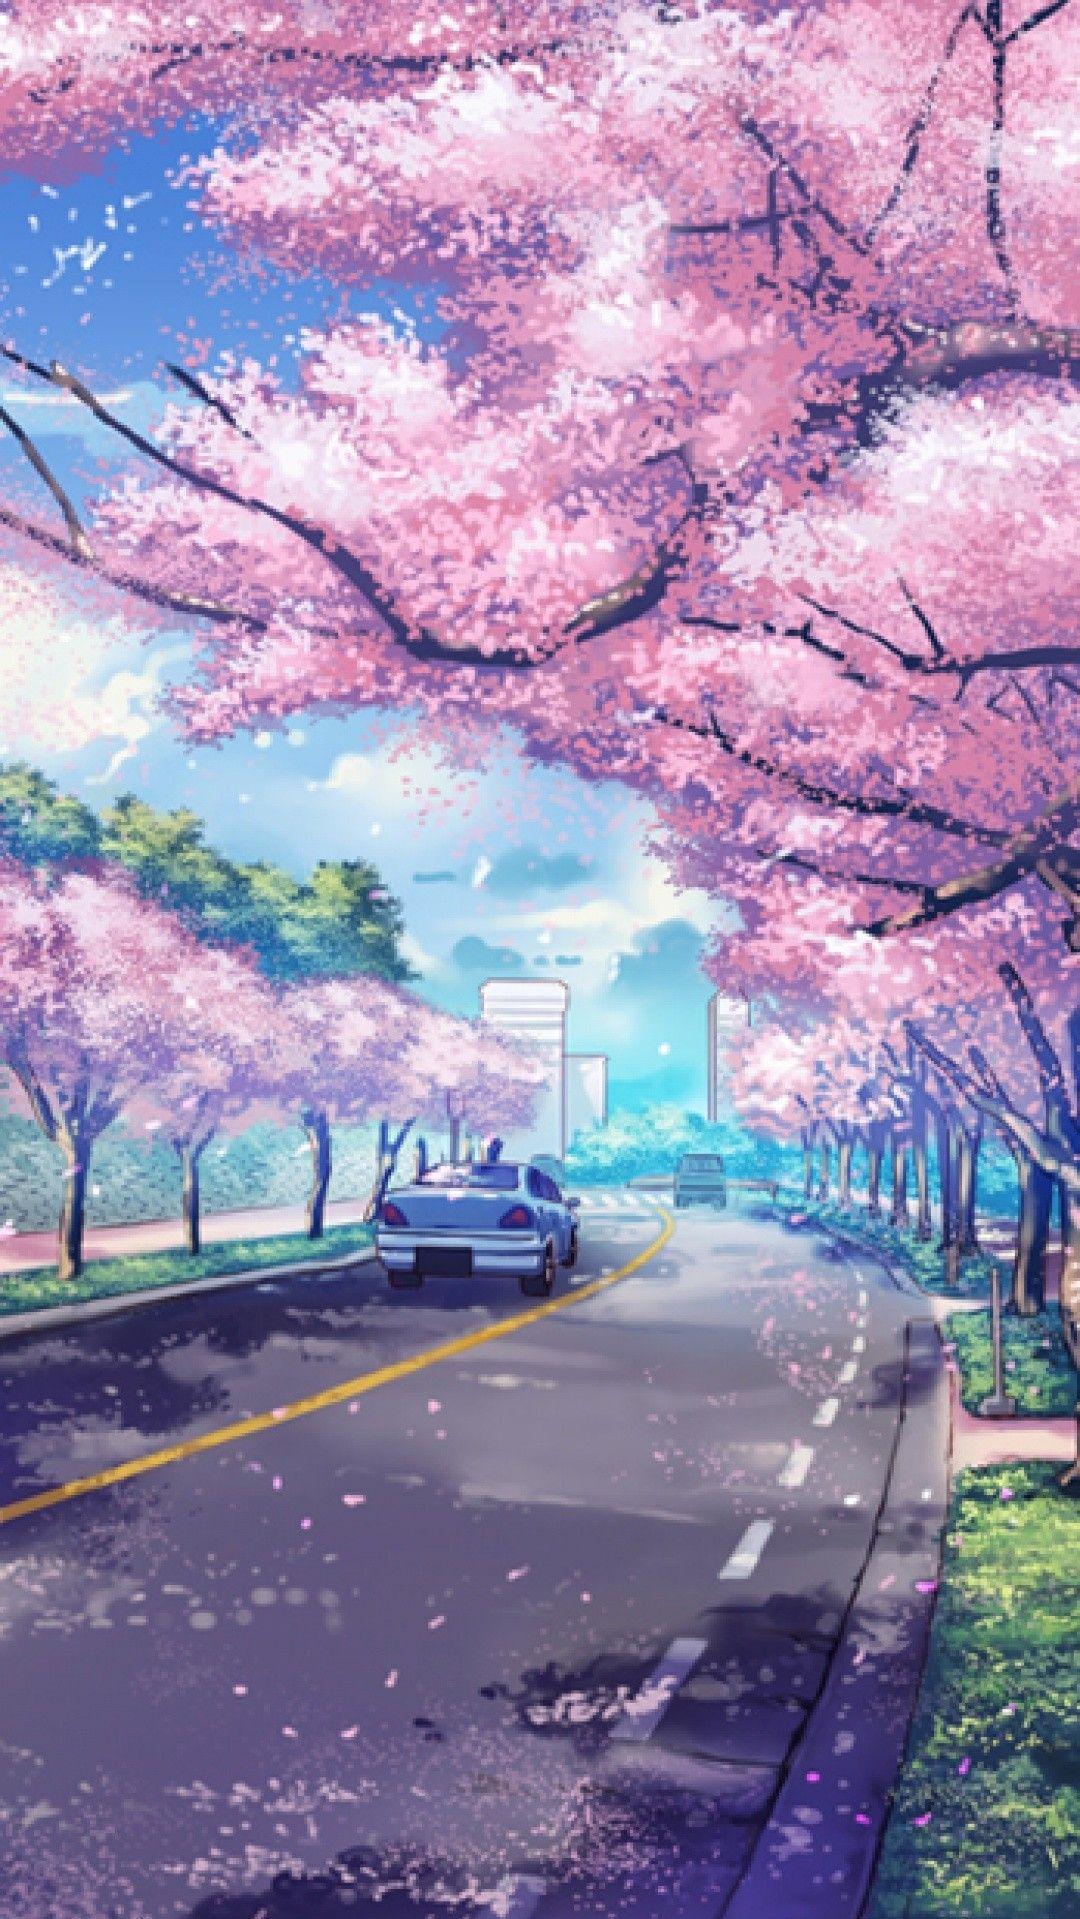 47+] Aesthetic Anime Wallpapers for iPhone - WallpaperSafari